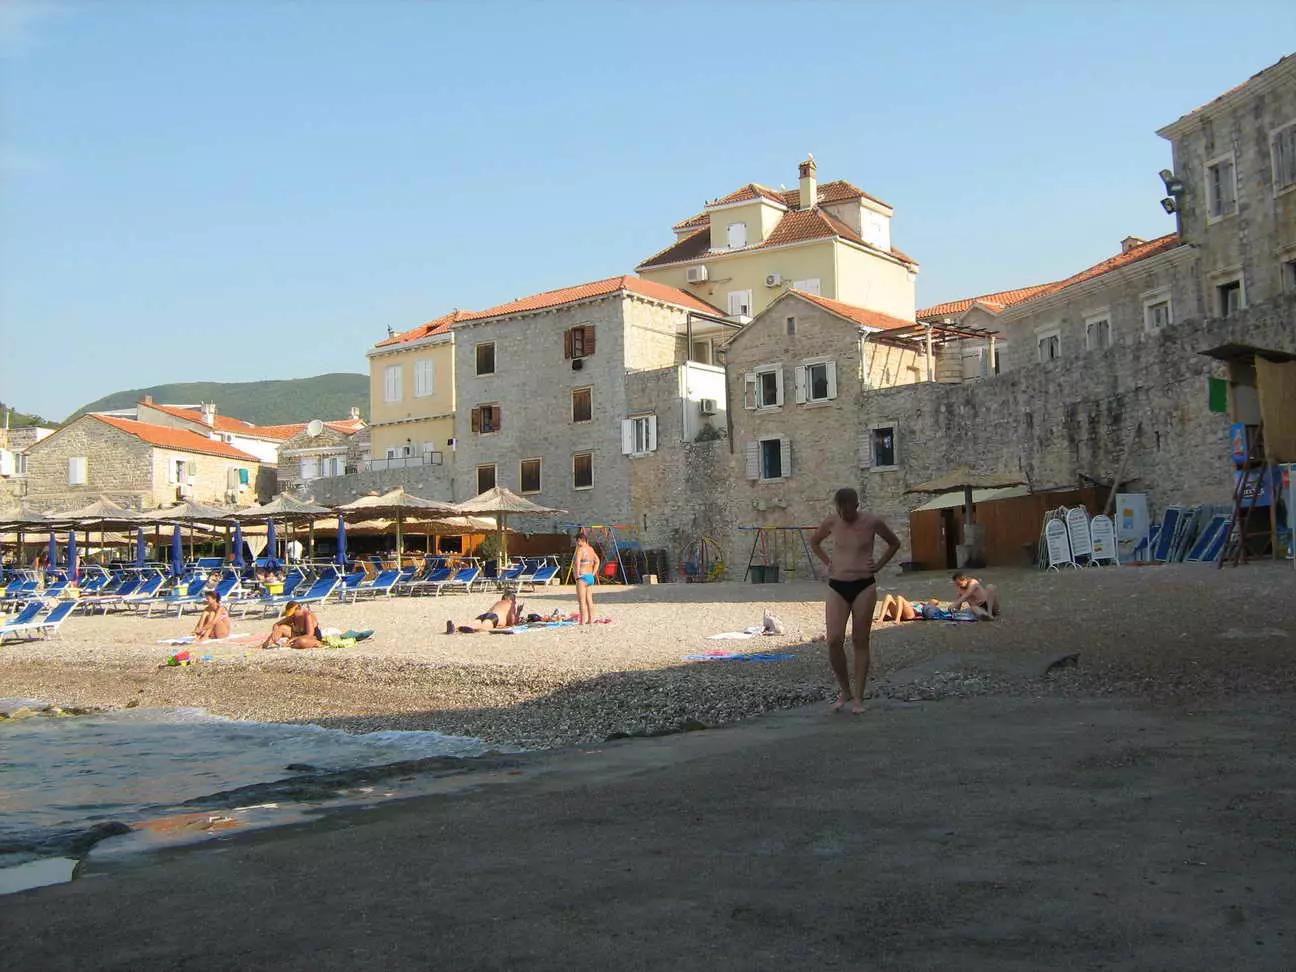 Buda Beach (62 ဓာတ်ပုံ) - Budva ၏အကောင်းဆုံးကမ်းခြေများ, Montenegro ရှိအခမဲ့ဇုန်များလည်ပတ်ခြင်းနှင့်အခမဲ့ဇုံများ။ မြေပုံပေါ်တွင်မည်သည့်နေရာတွင် Slavic ကမ်းခြေကိုရှာဖွေသနည်း။ ခရီးသွားပြန်လည်သုံးသပ်ခြင်း 20610_62